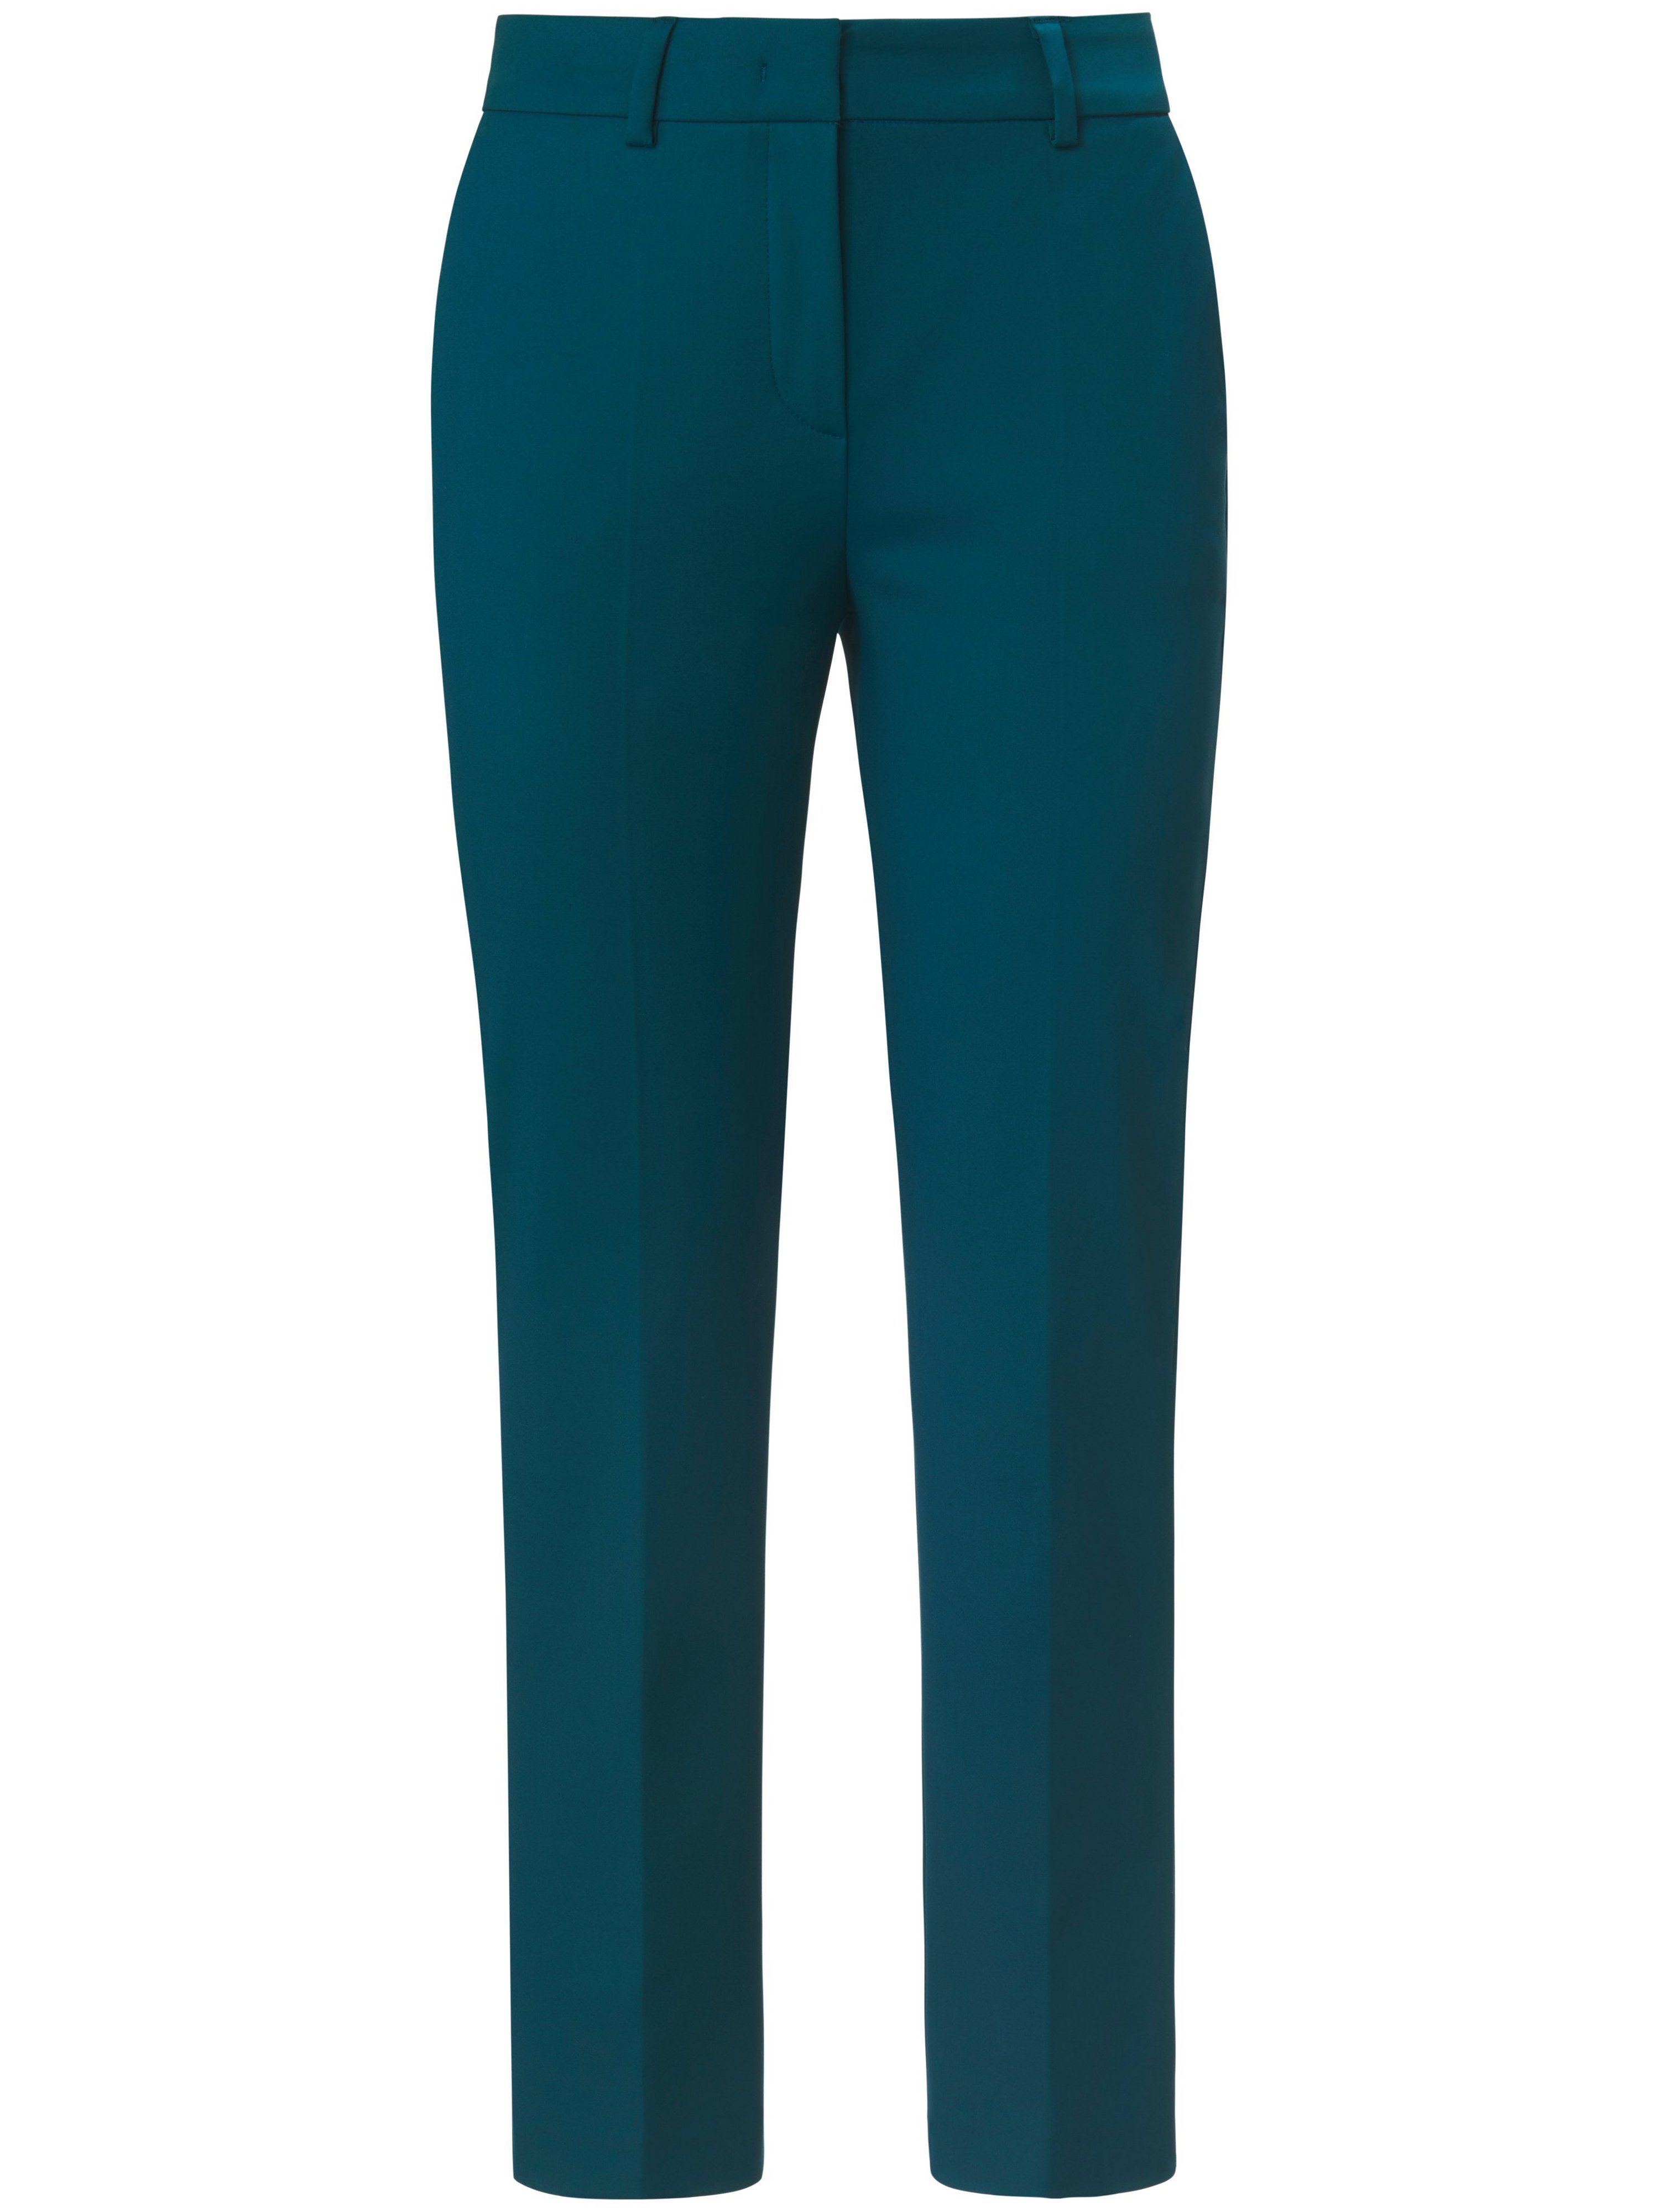 Le pantalon 7/8  Uta Raasch turquoise